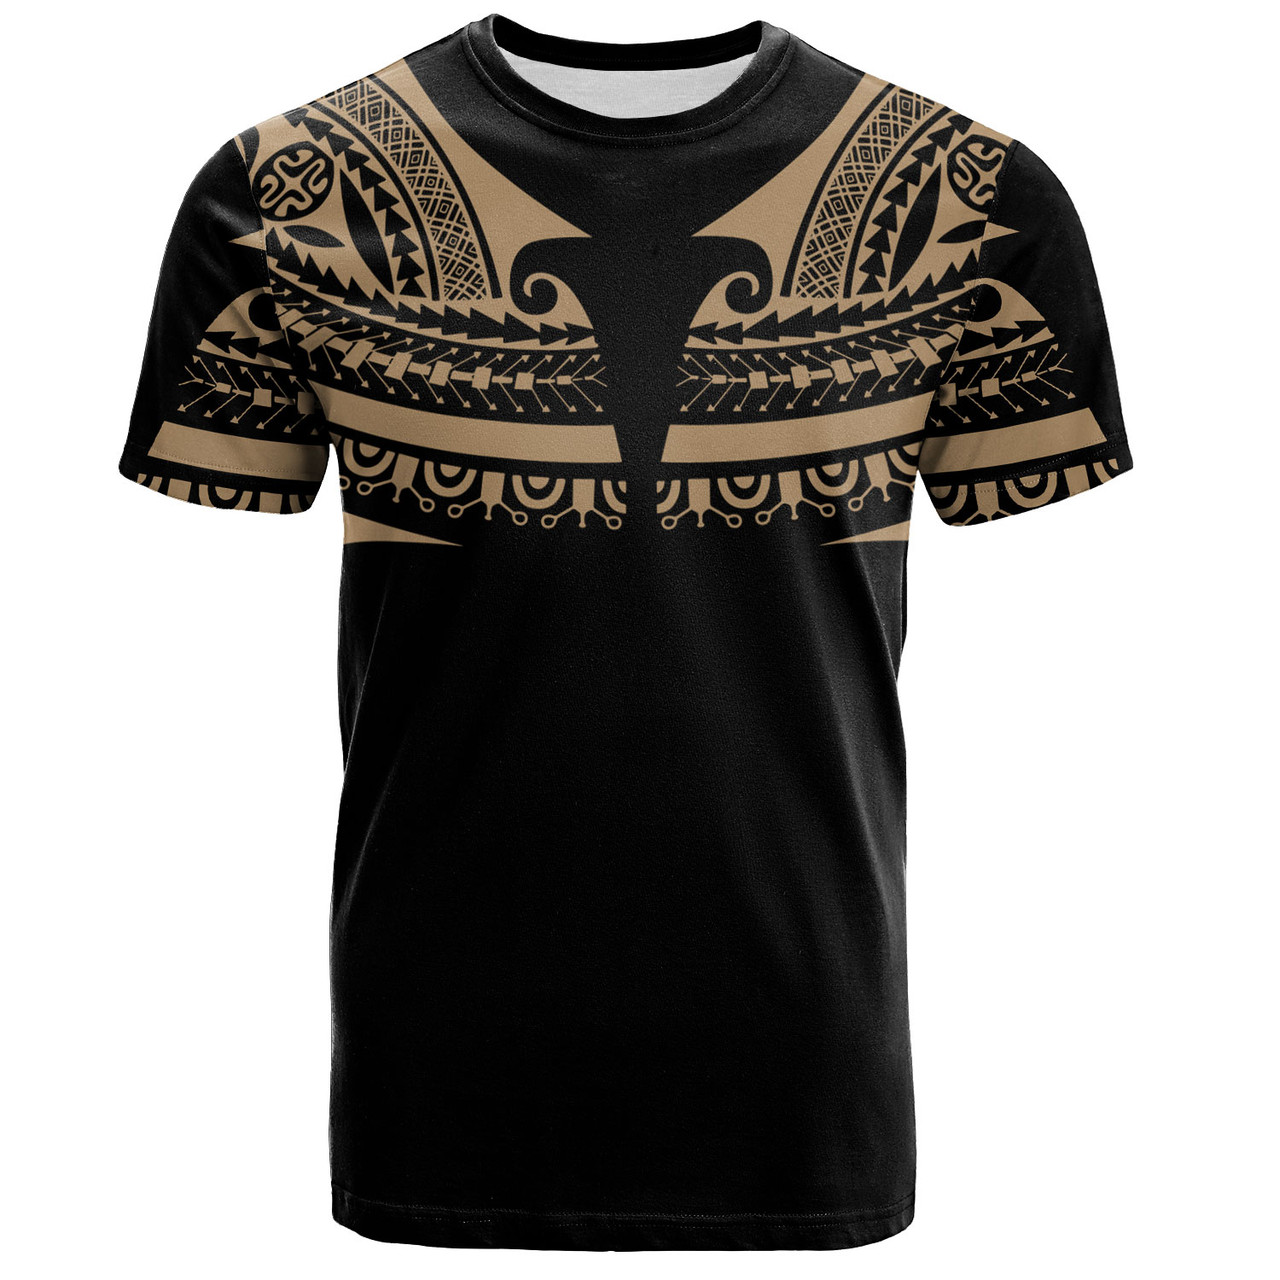 Polynesian All Over Print T-Shirts - Polynesian Tattoo Style